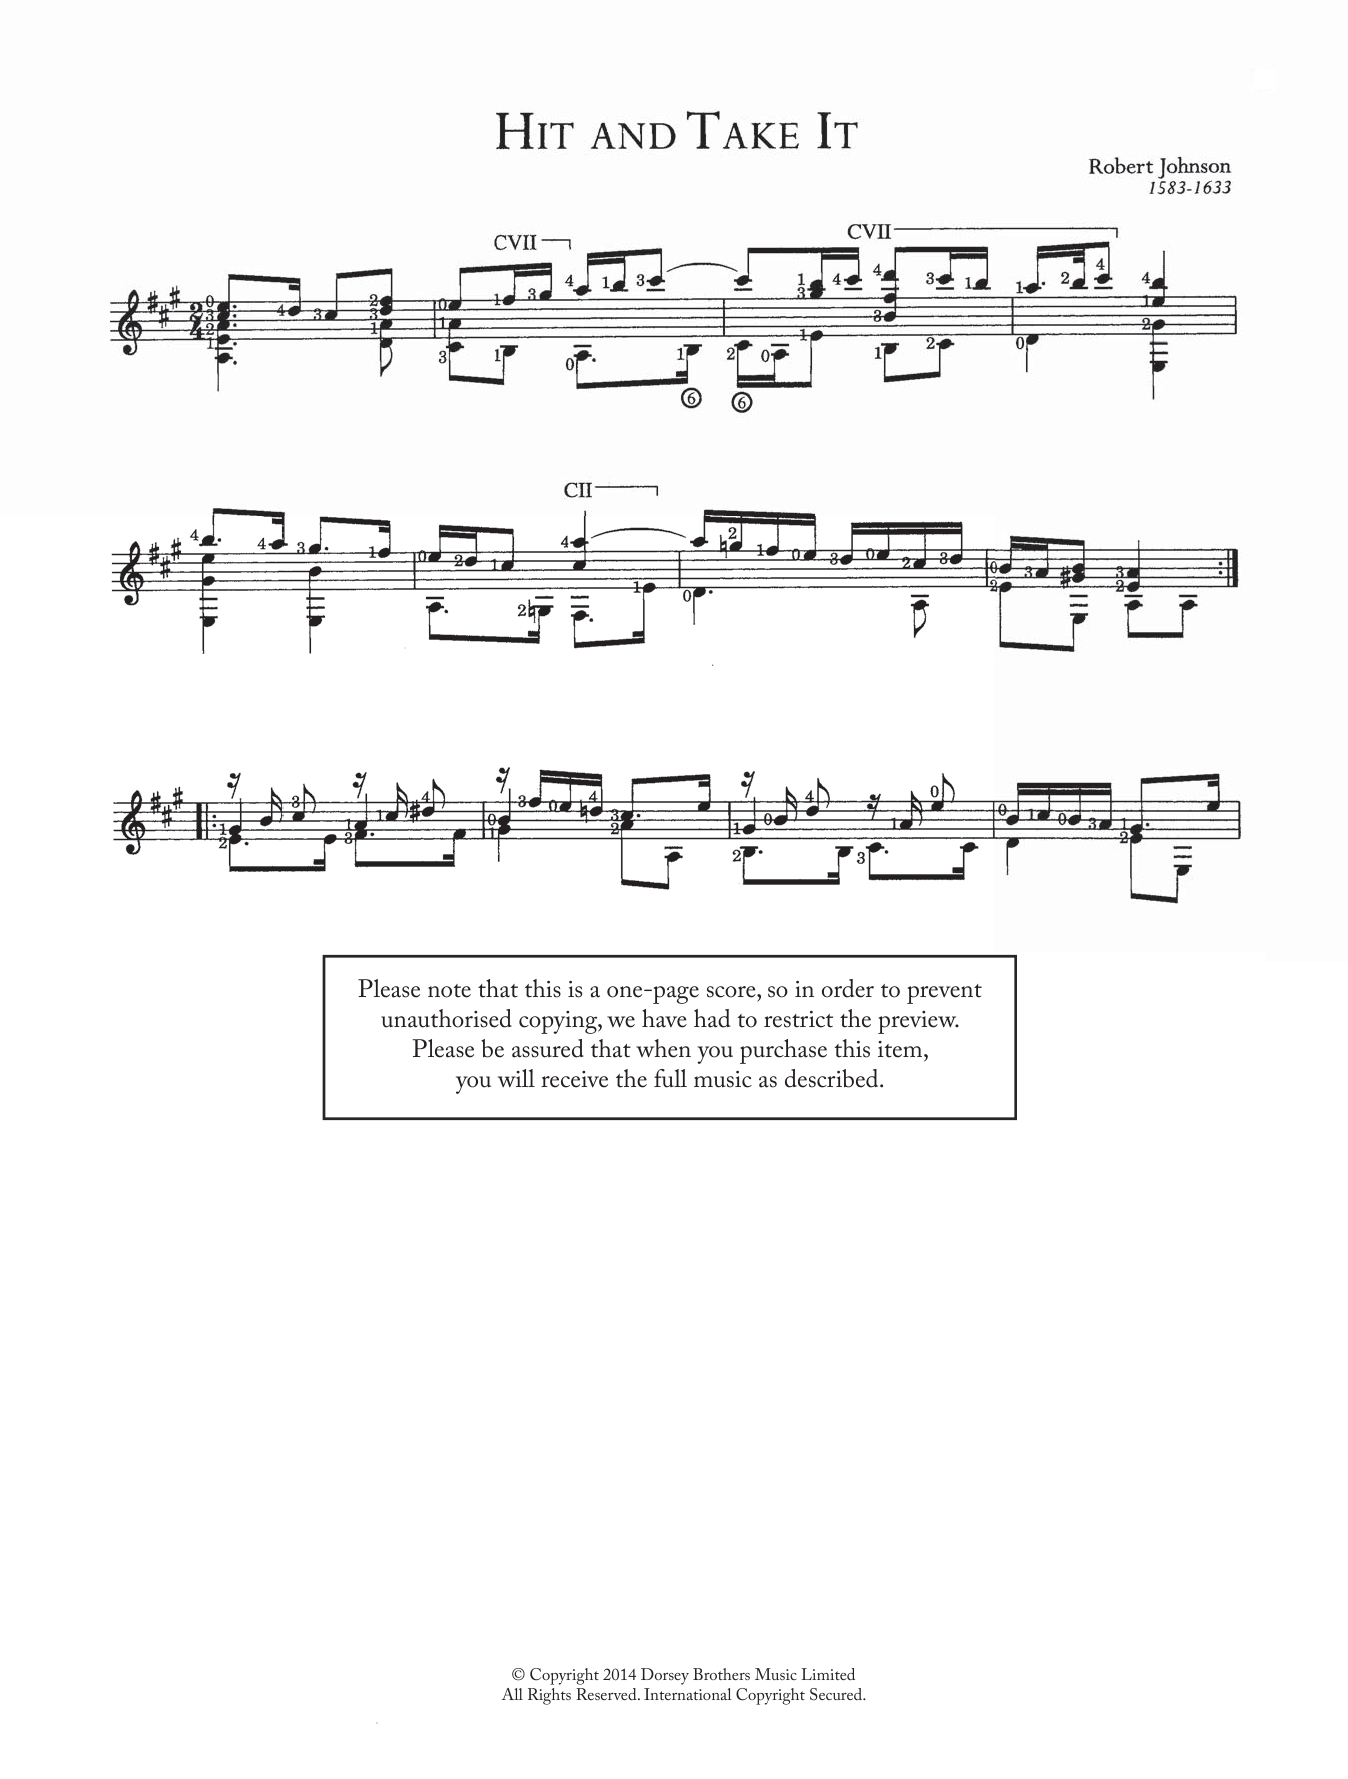 Robert Johnson II Hit And Take It Sheet Music Notes & Chords for Guitar - Download or Print PDF